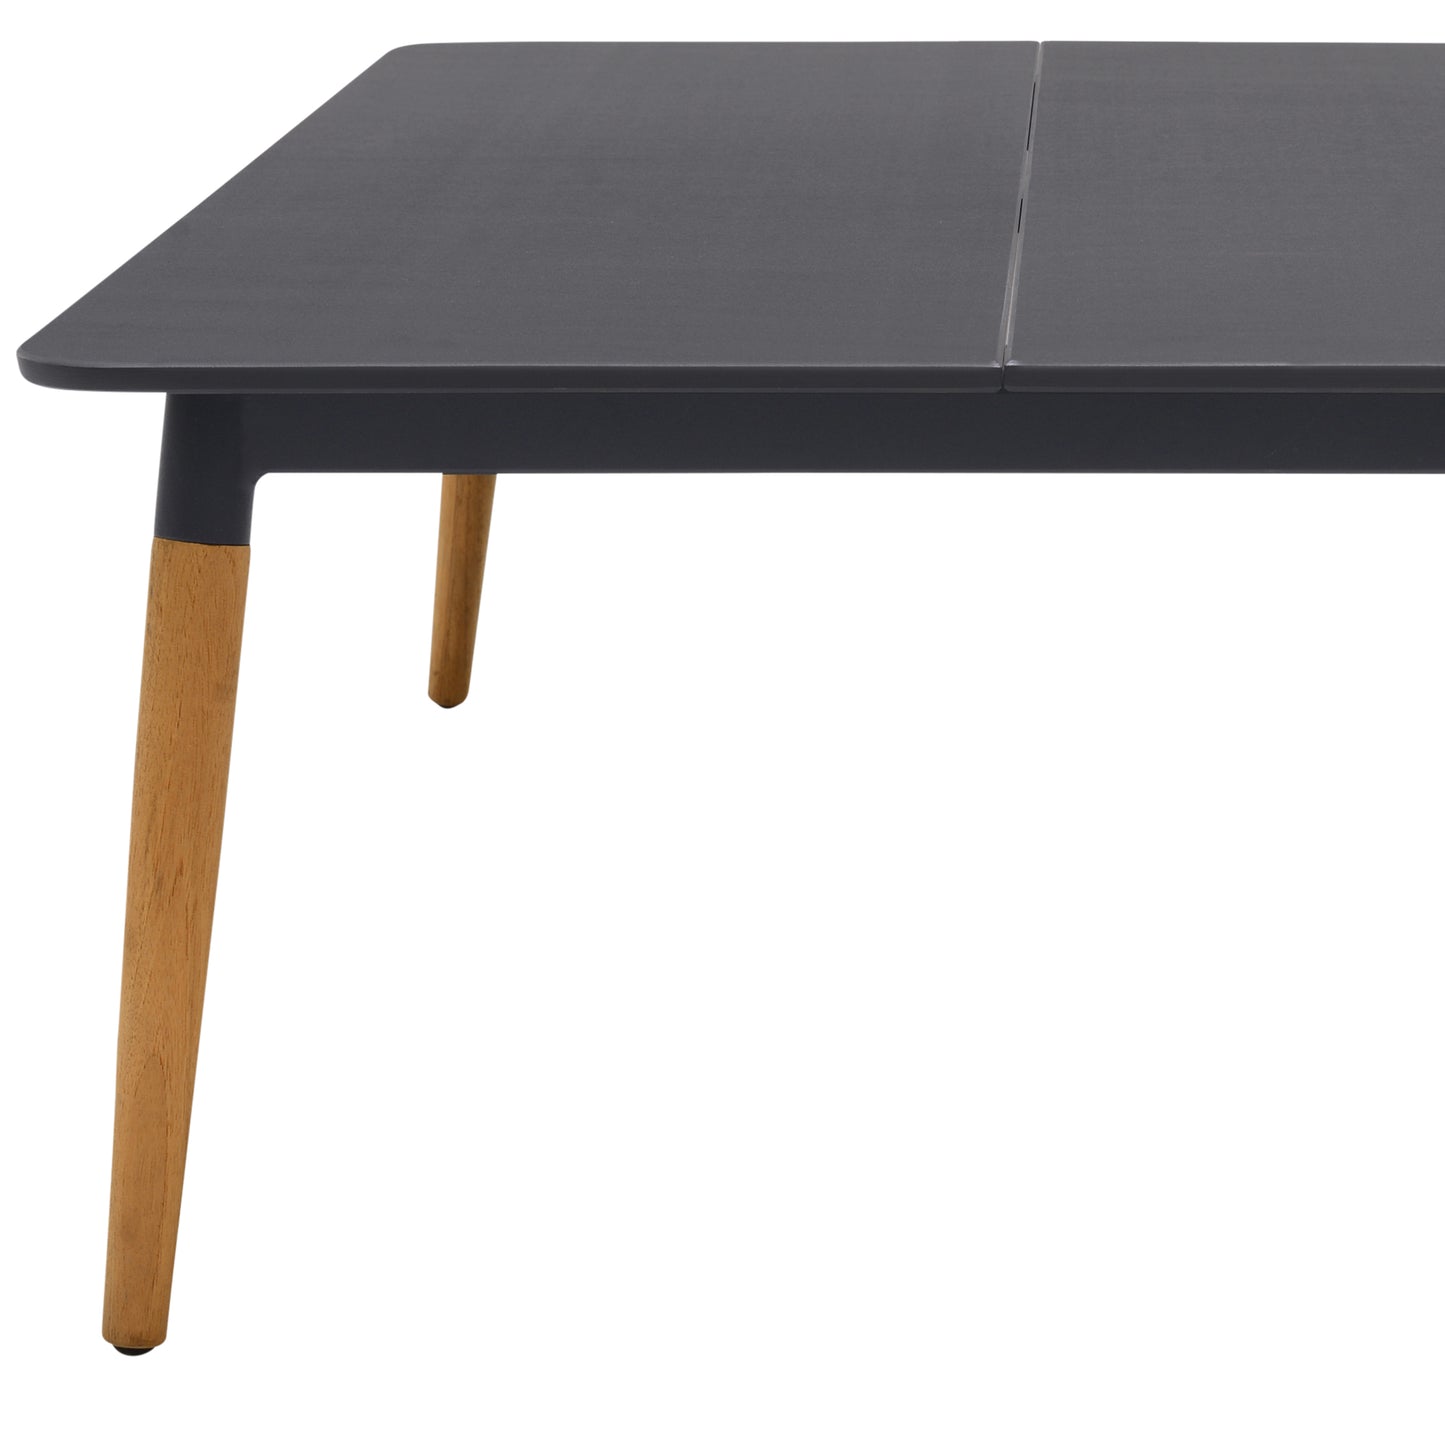 Ipanema Outdoor Dark Gray Rectangular Coffee Table with Teak Legs